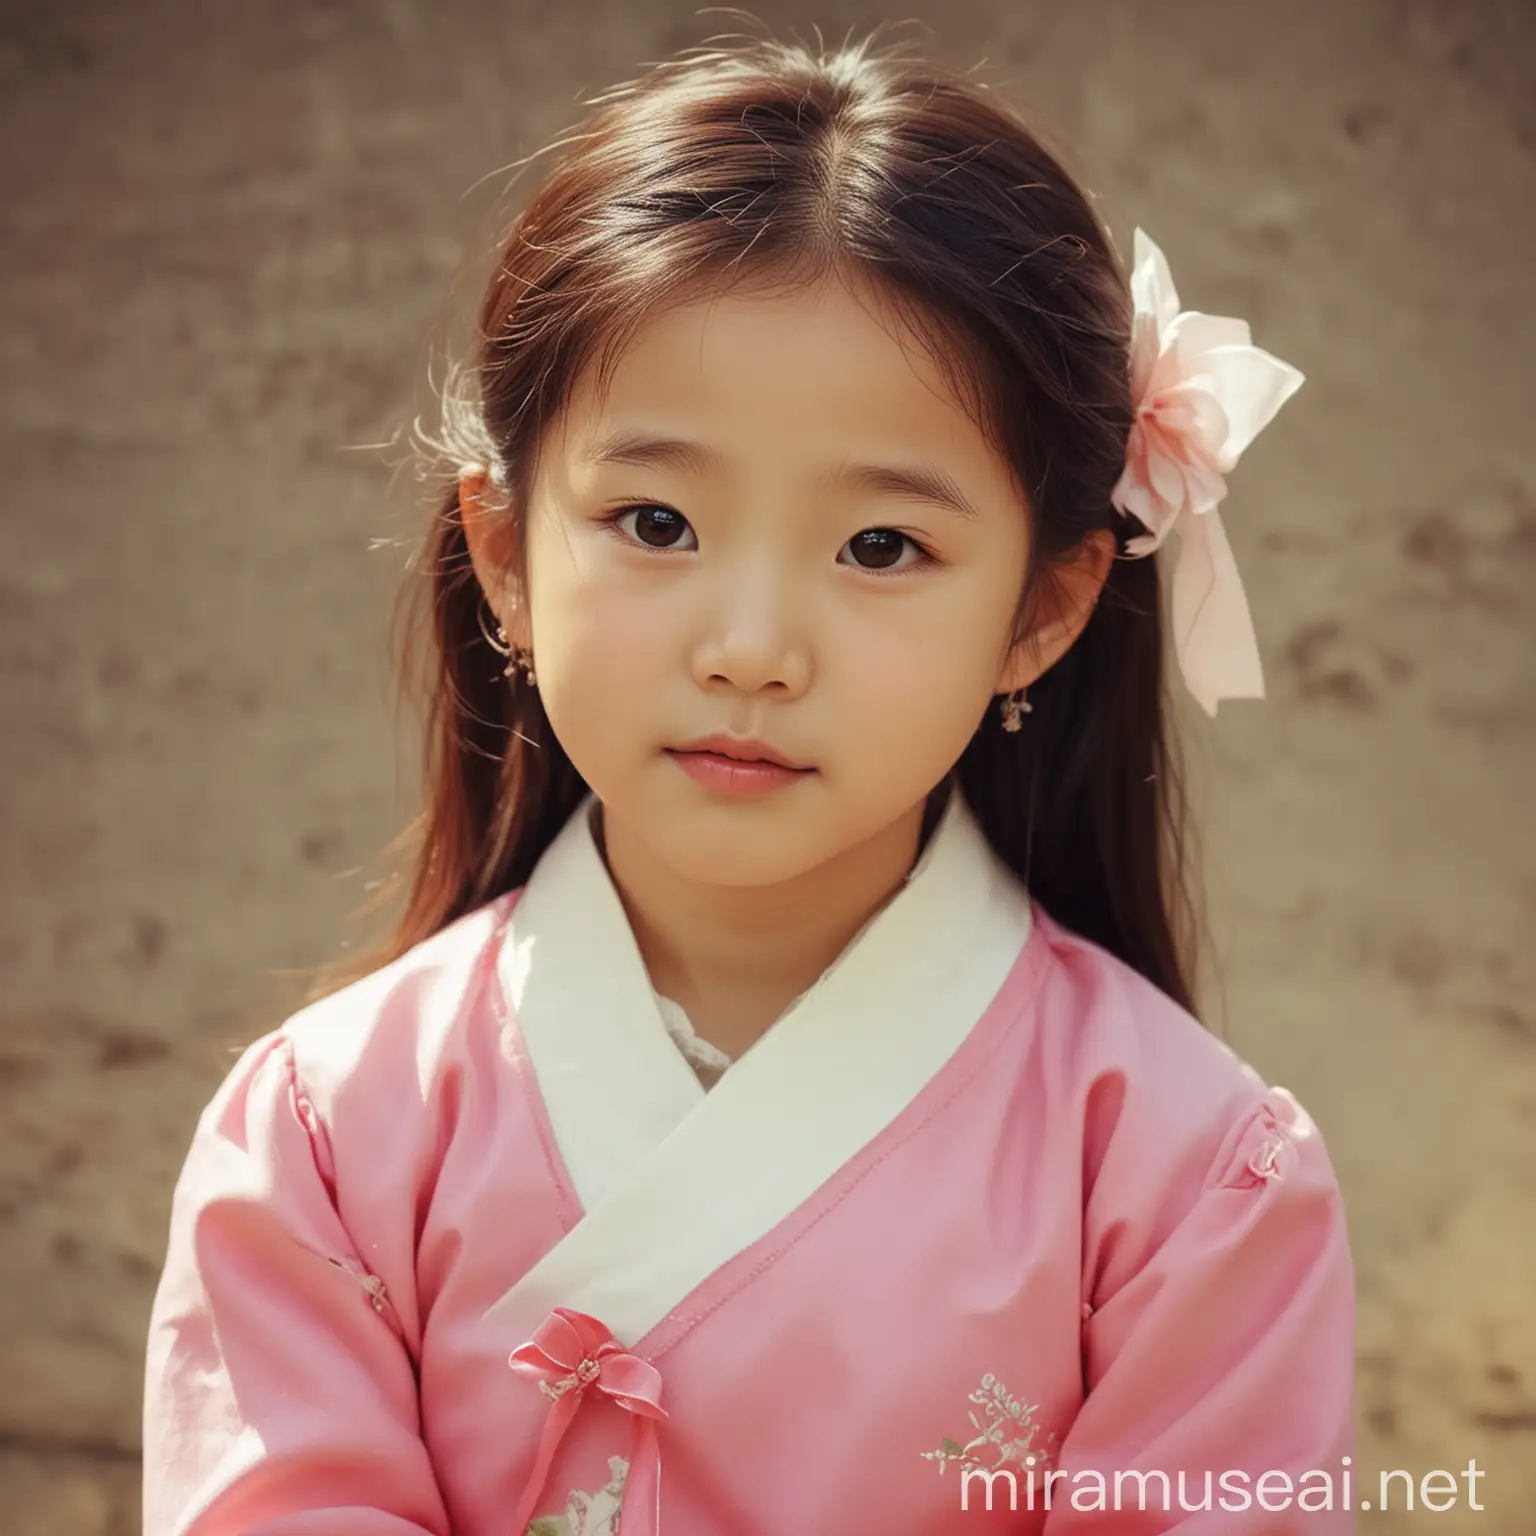 Korean beautiful little girl childhood